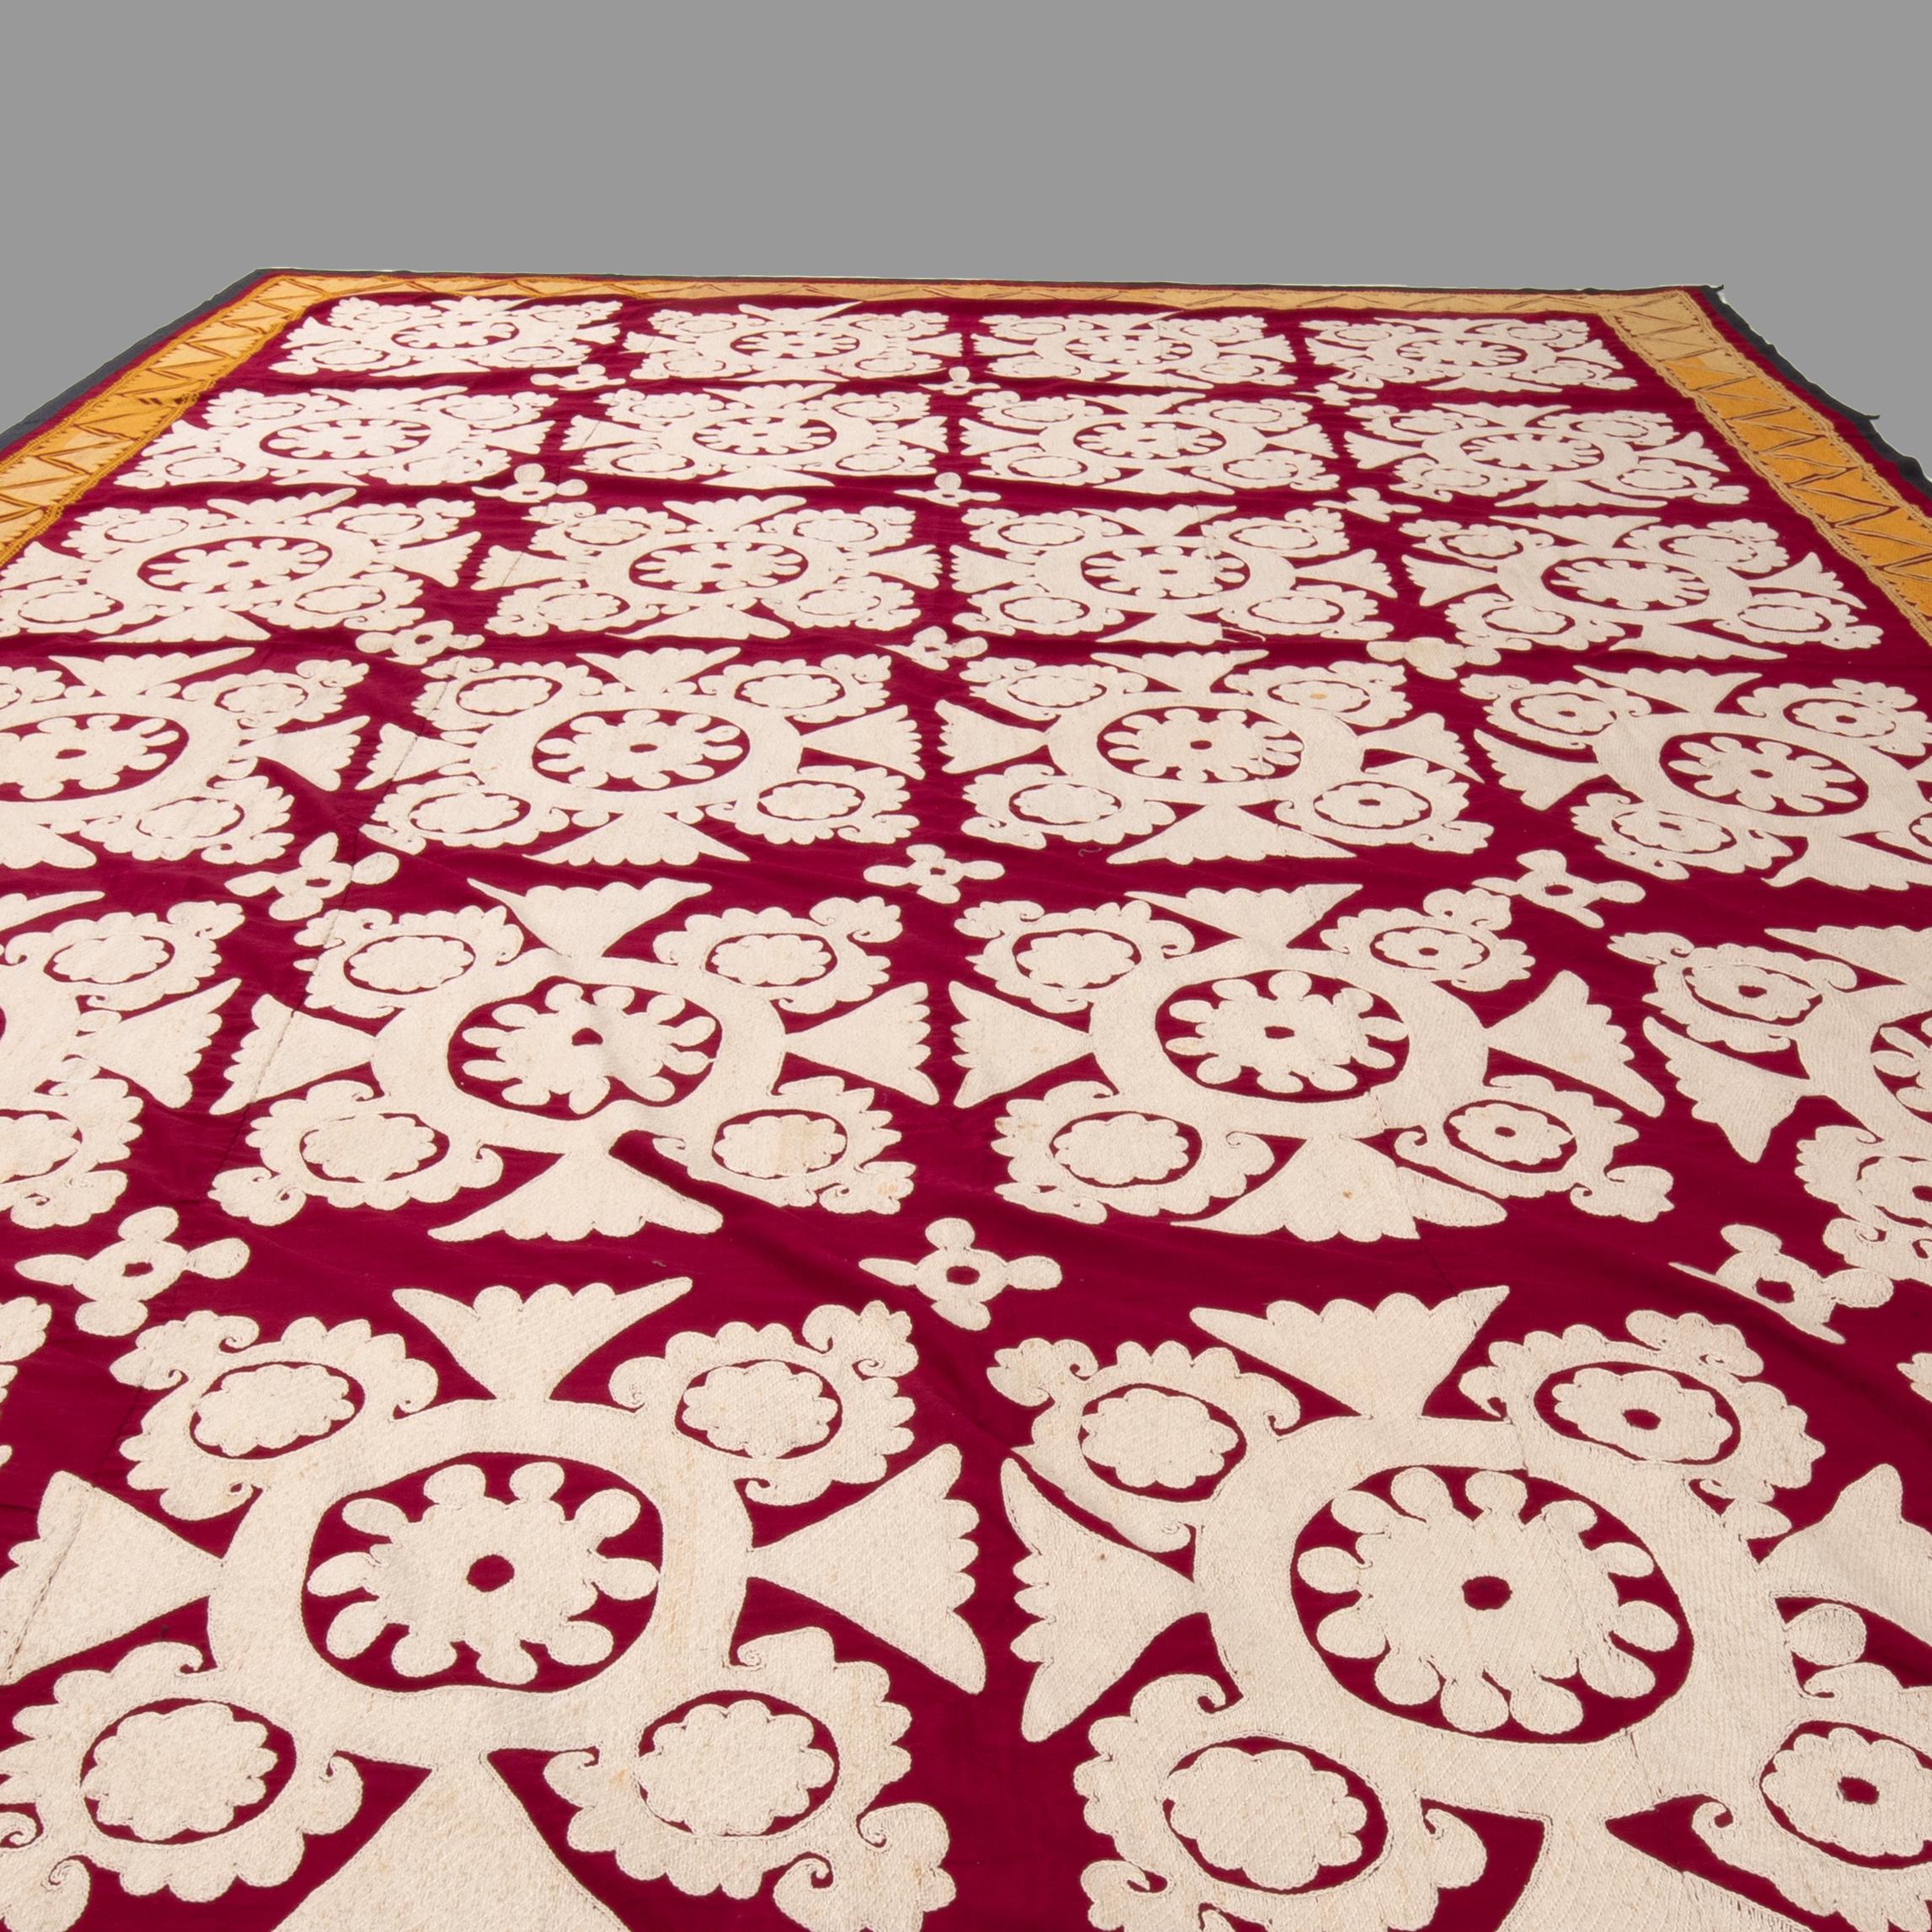 Decorative Red and White Cotton Suzani, Uzbekistan, 1960s For Sale 1